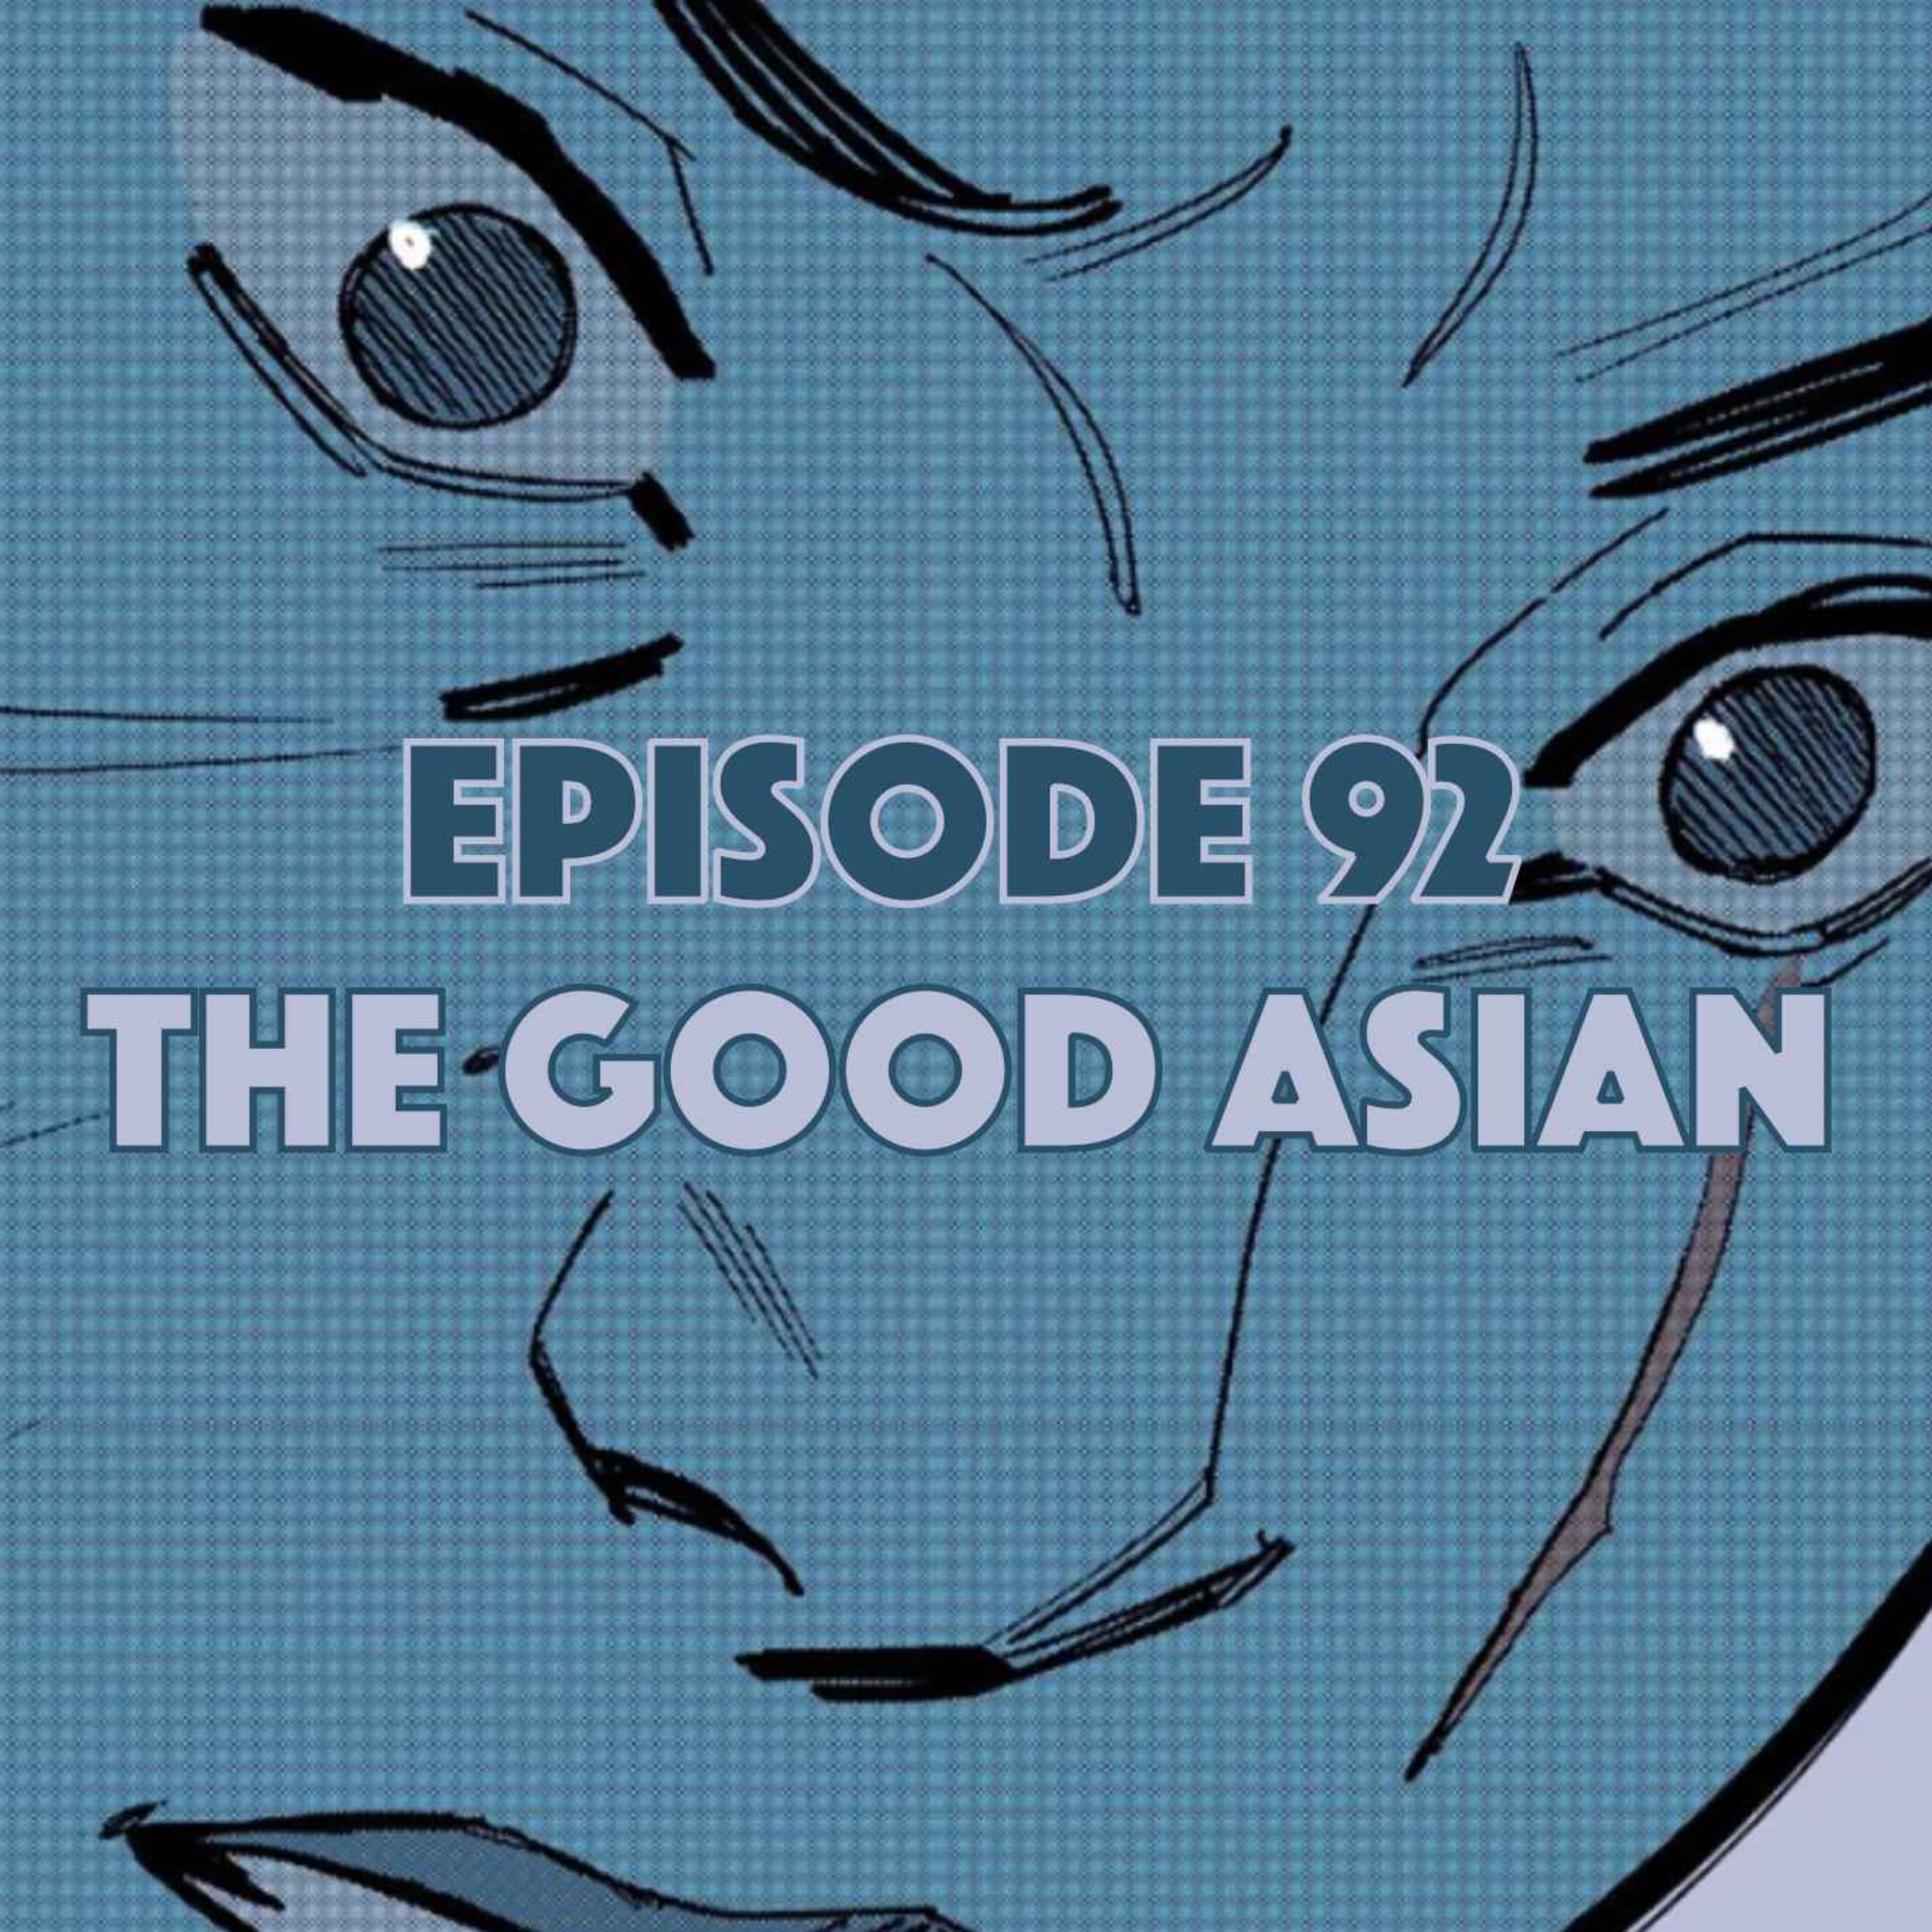 The Good Asian, Vol. 1